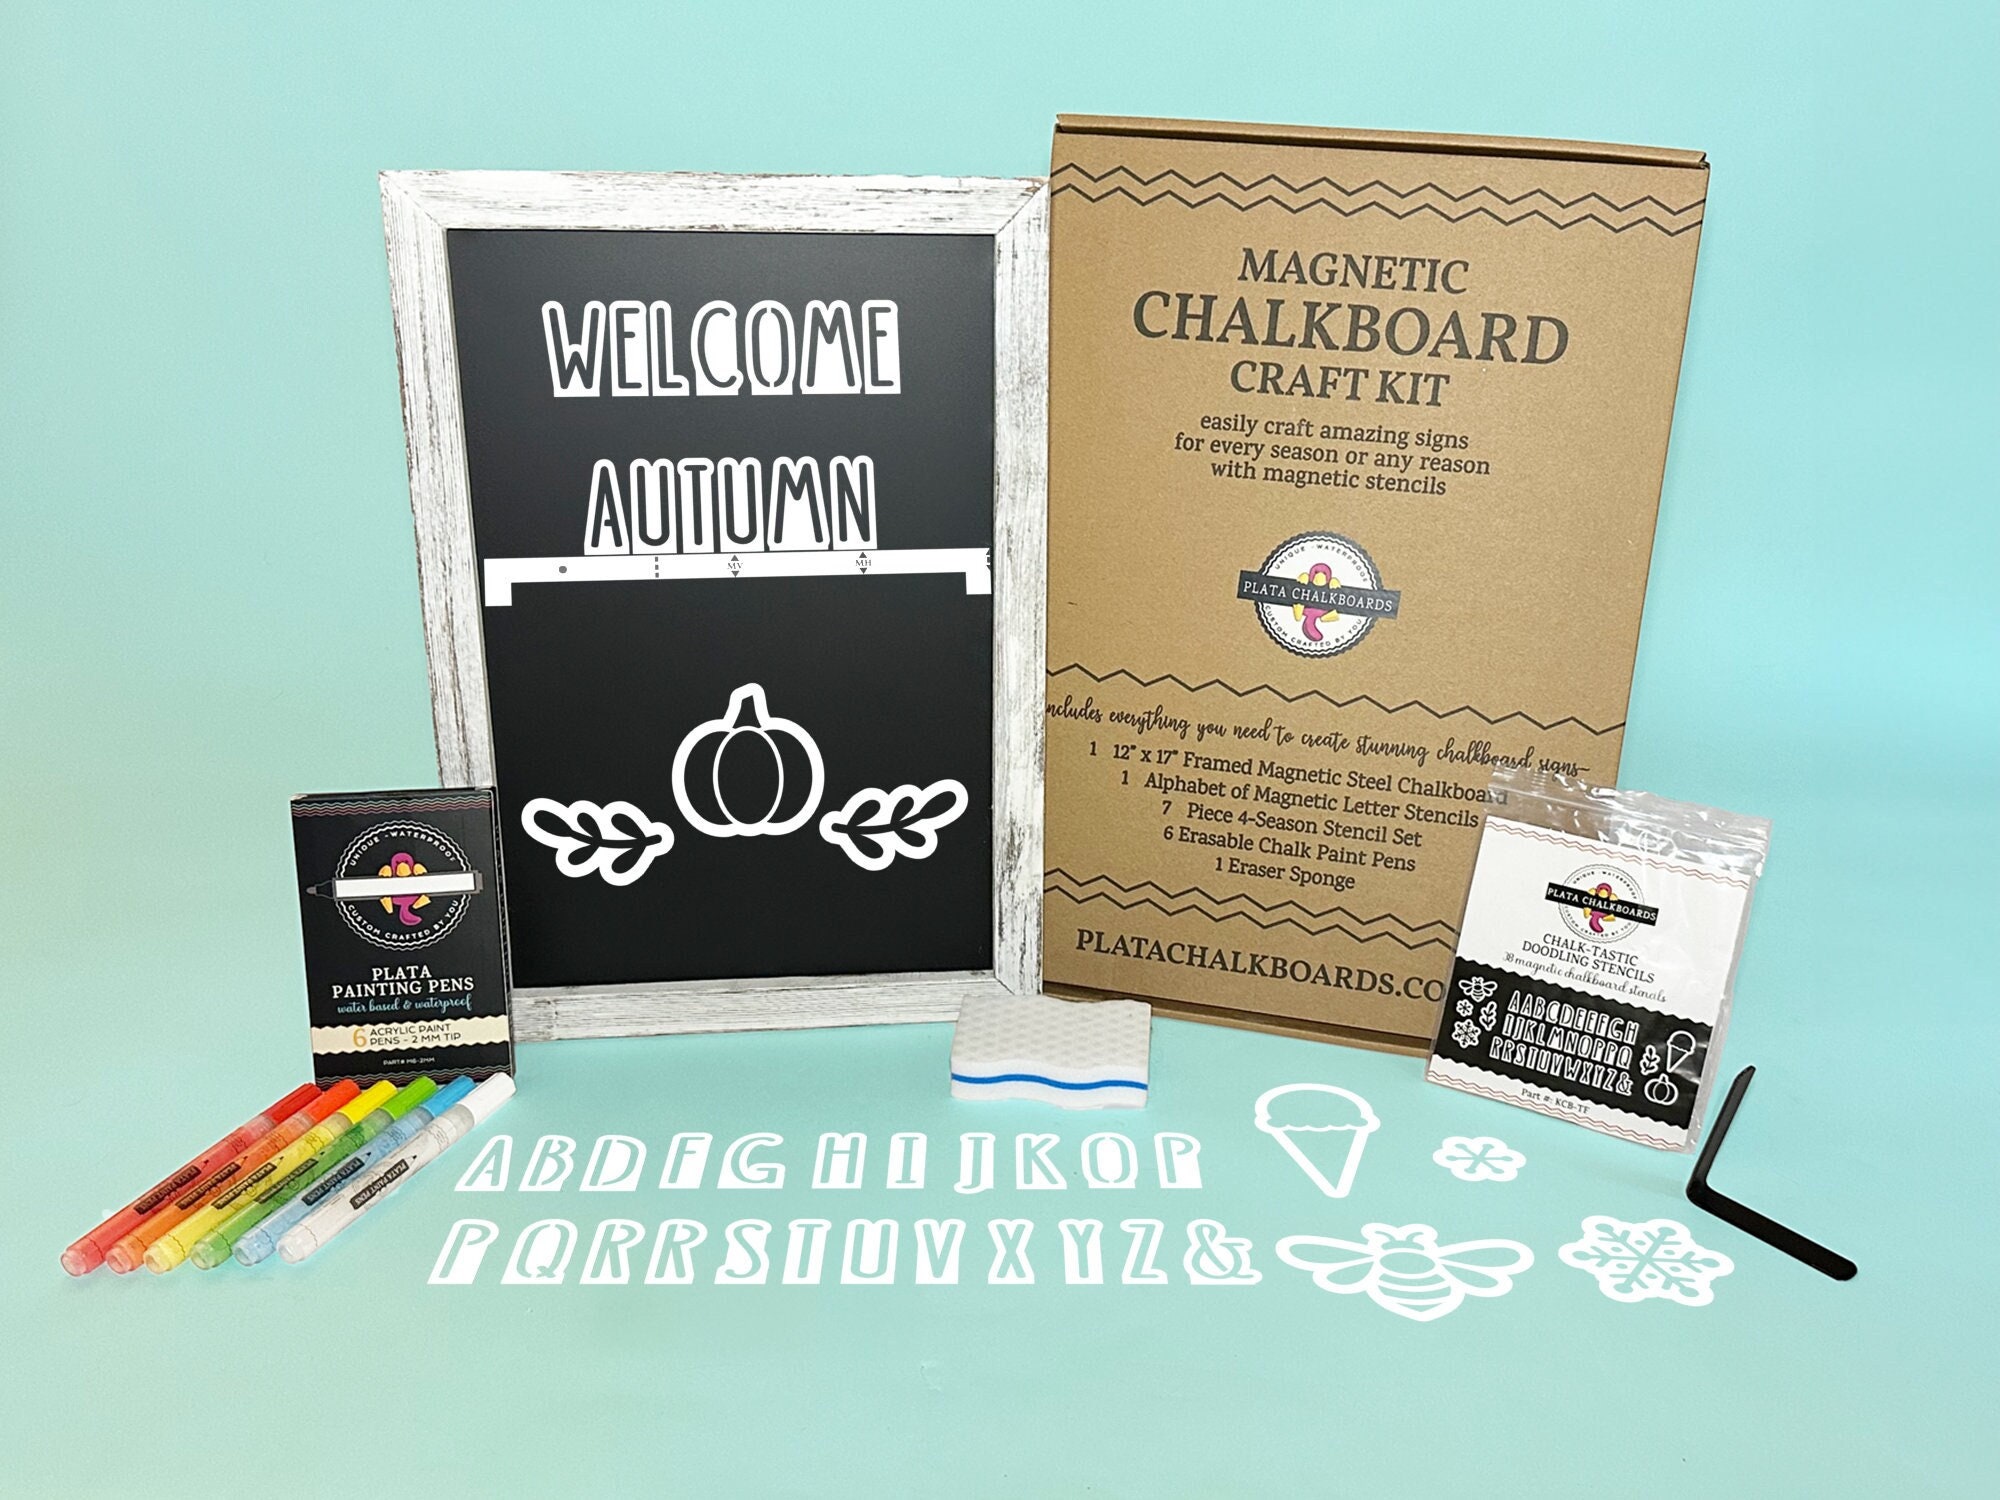 Magnetic Chalkboard Craft Kit blackboard, Markers, Season, Letter Stencils  DIY Crafts for Adults, Teens, Kids, Craft Ideas, Craft Supplies 